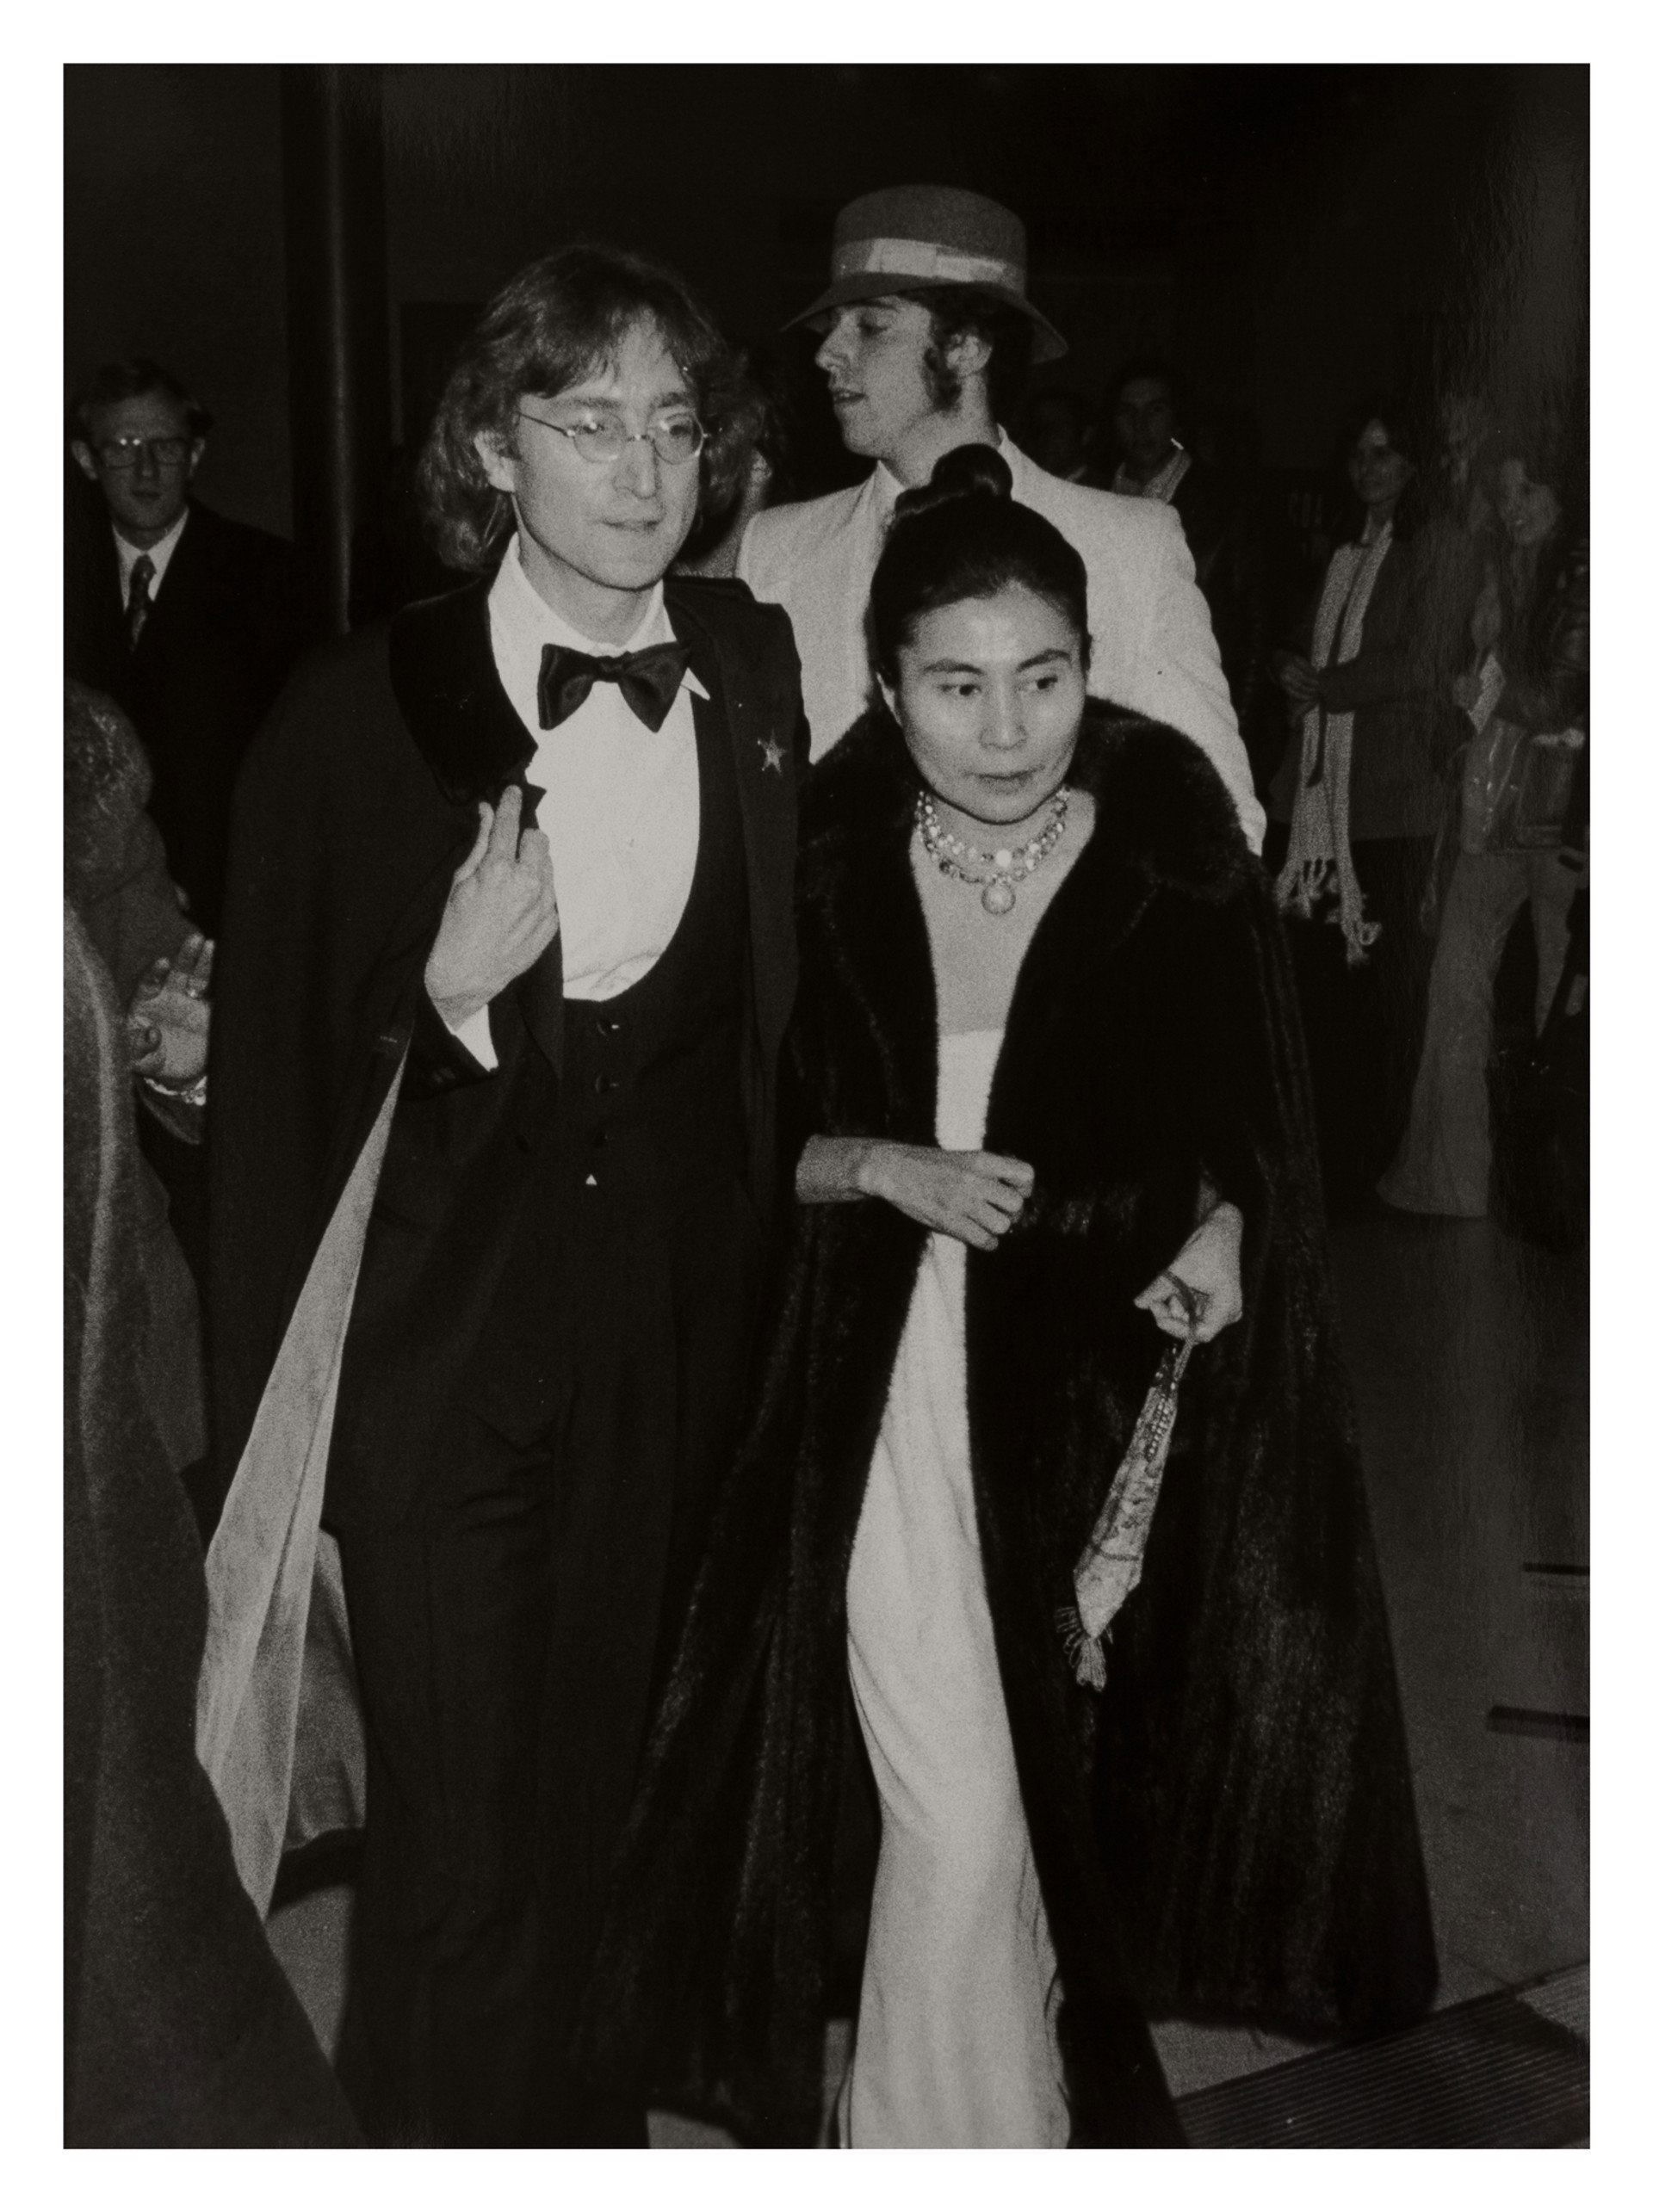 John Lennon and Yoko Ono by Ron Galella